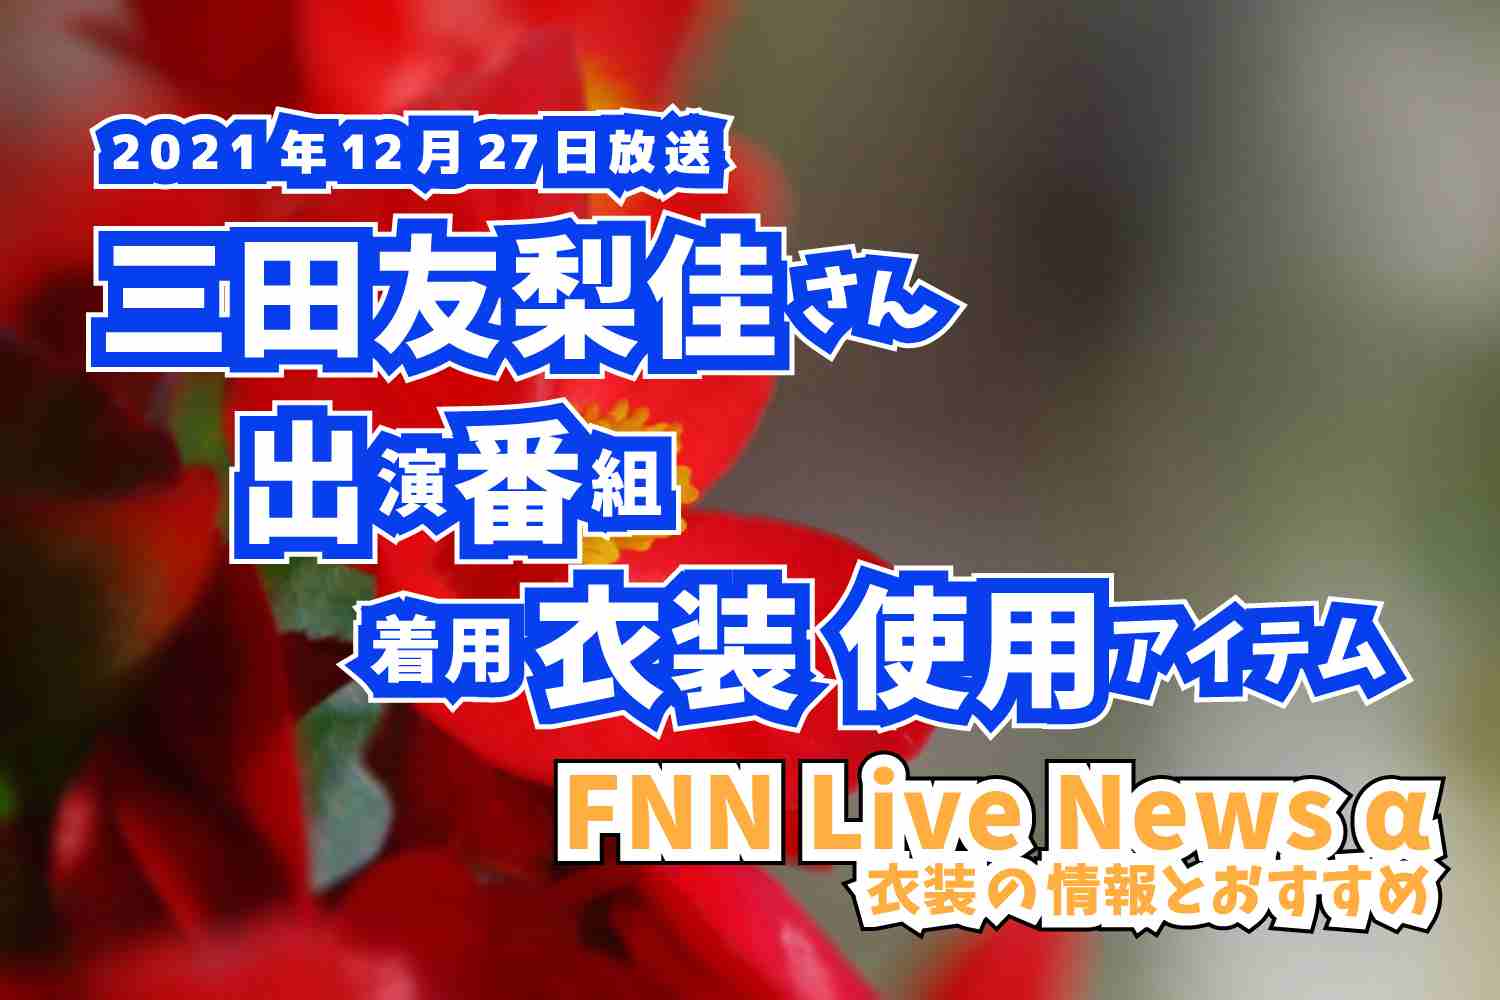 FNN Live News α　三田友梨佳さん　衣装　2021年12月27日放送